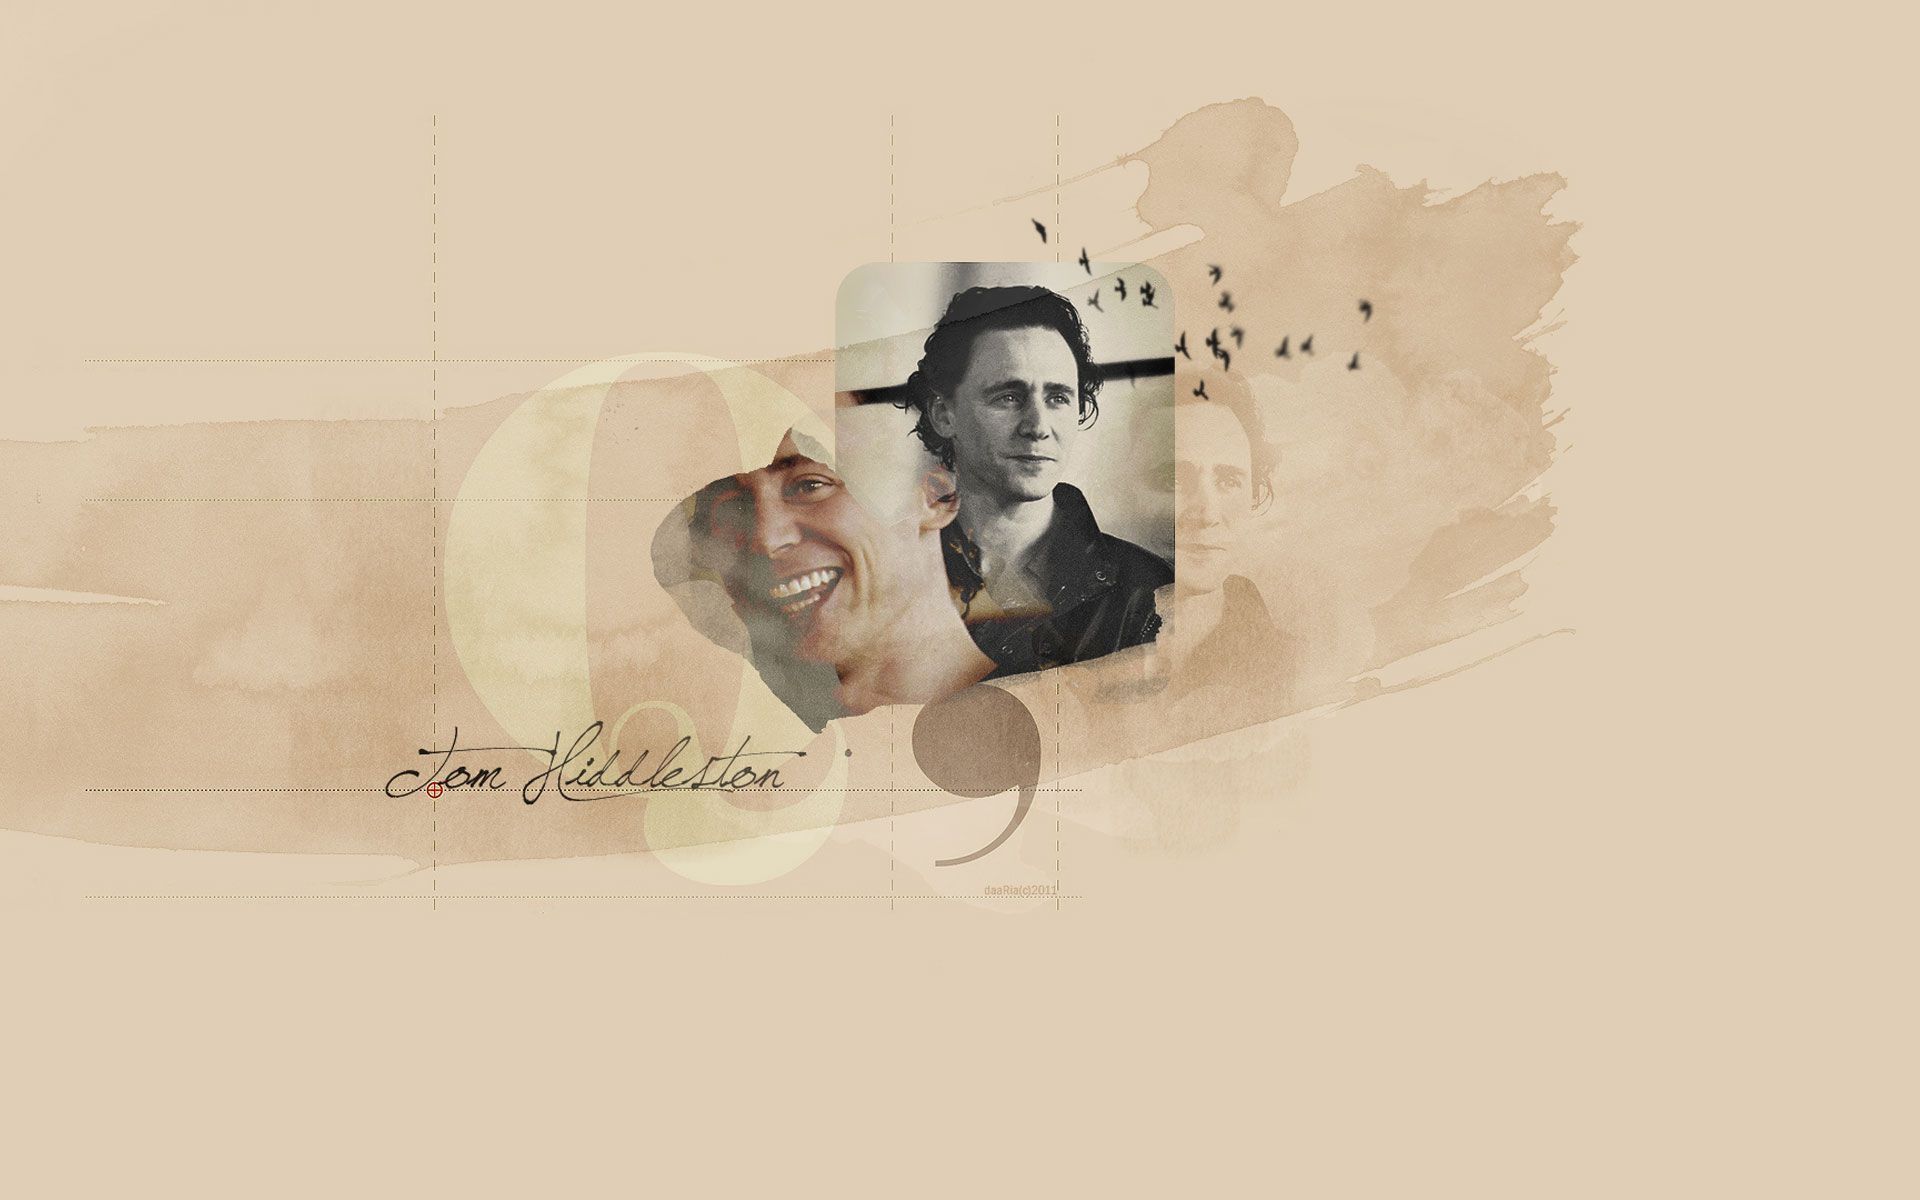 Tom Hiddleston - Tom Hiddleston Wallpaper (29611117) - Fanpop